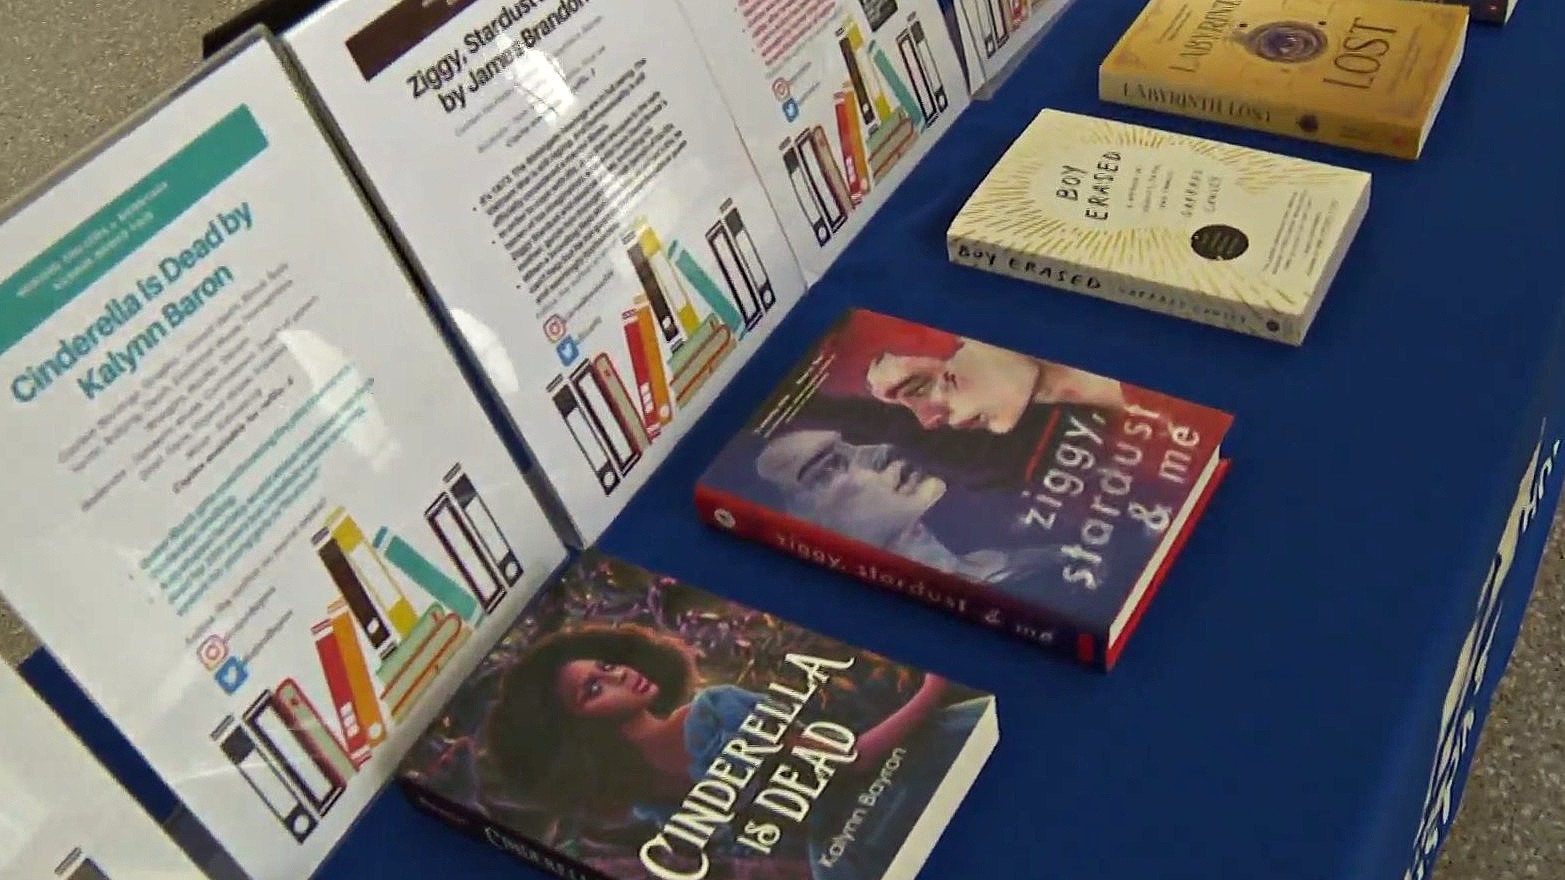 Banned Book Fair At UMass Boston Celebrates Diversity